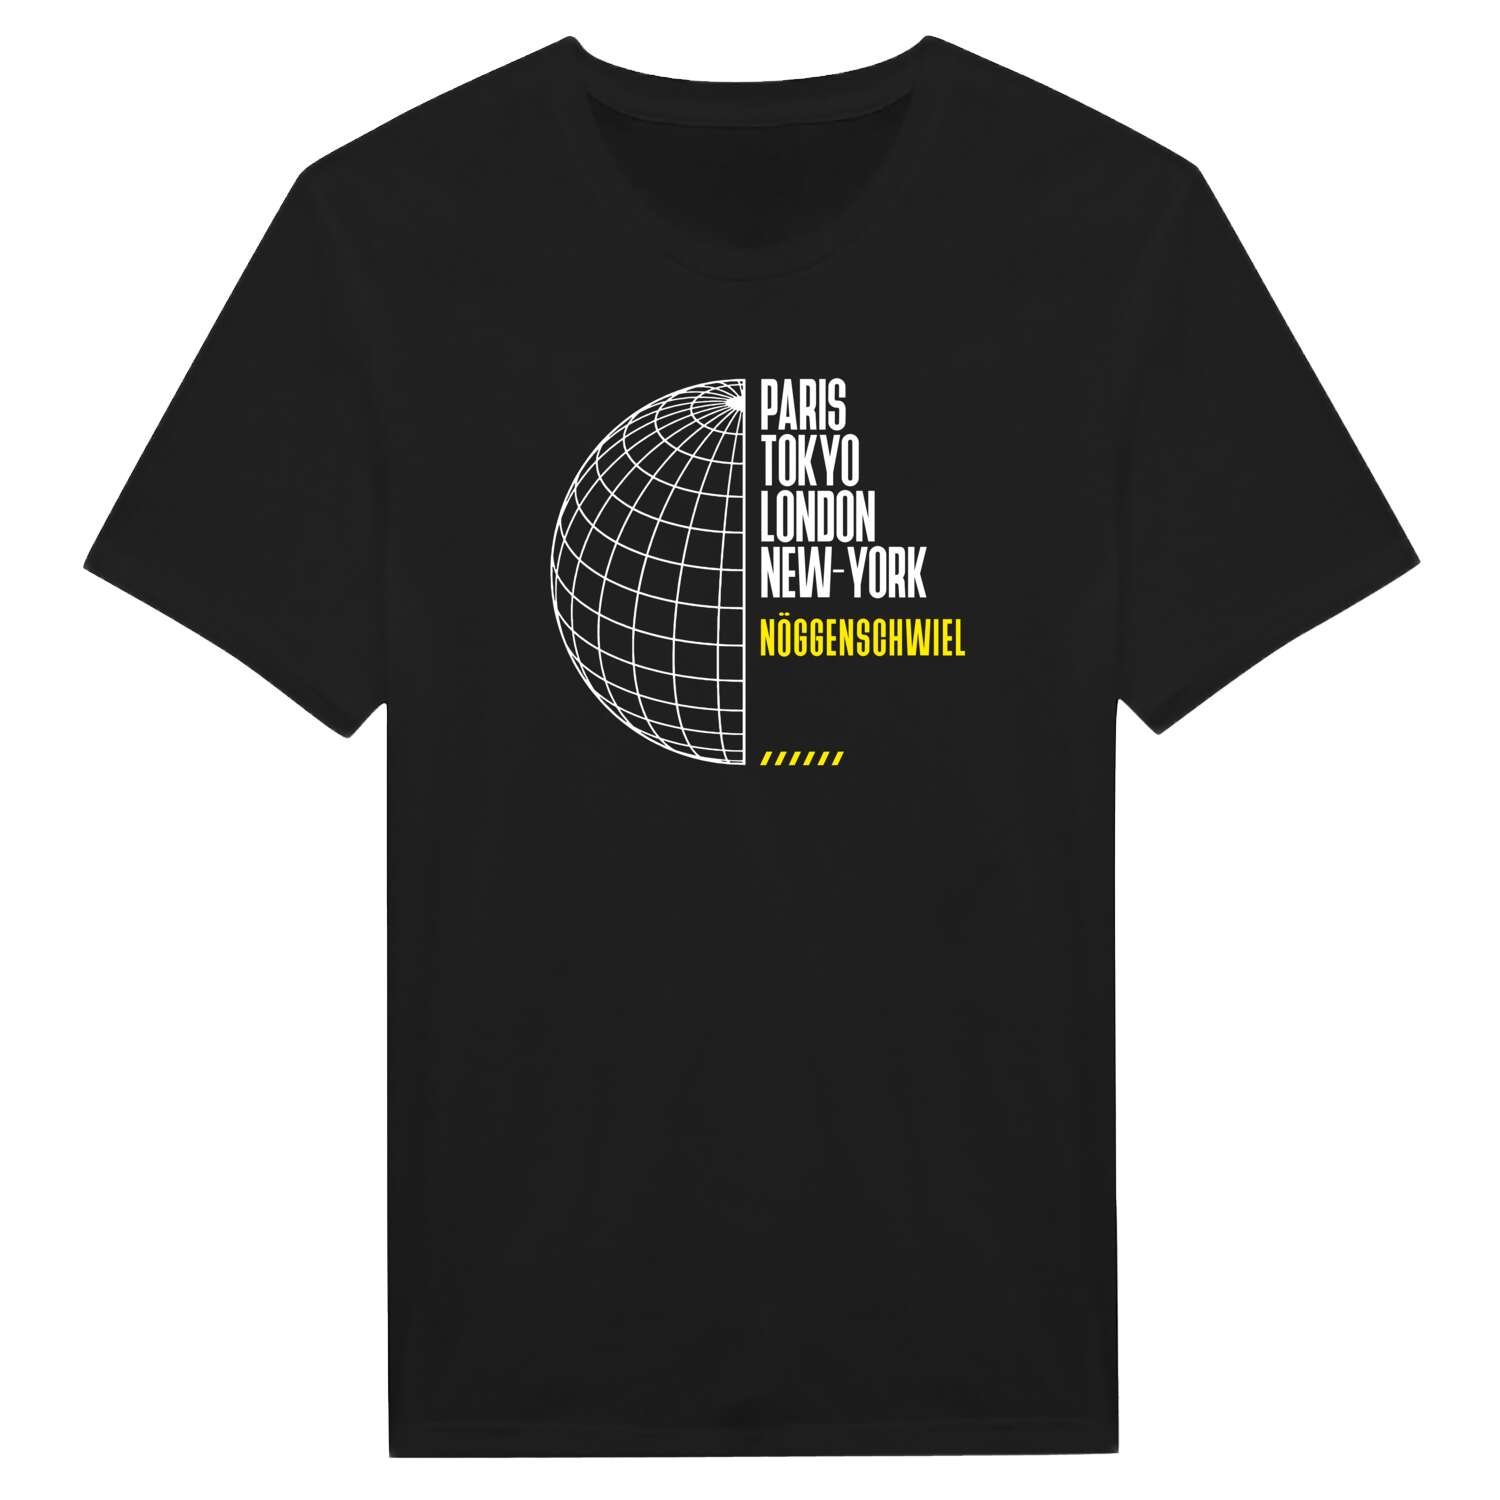 Nöggenschwiel T-Shirt »Paris Tokyo London«